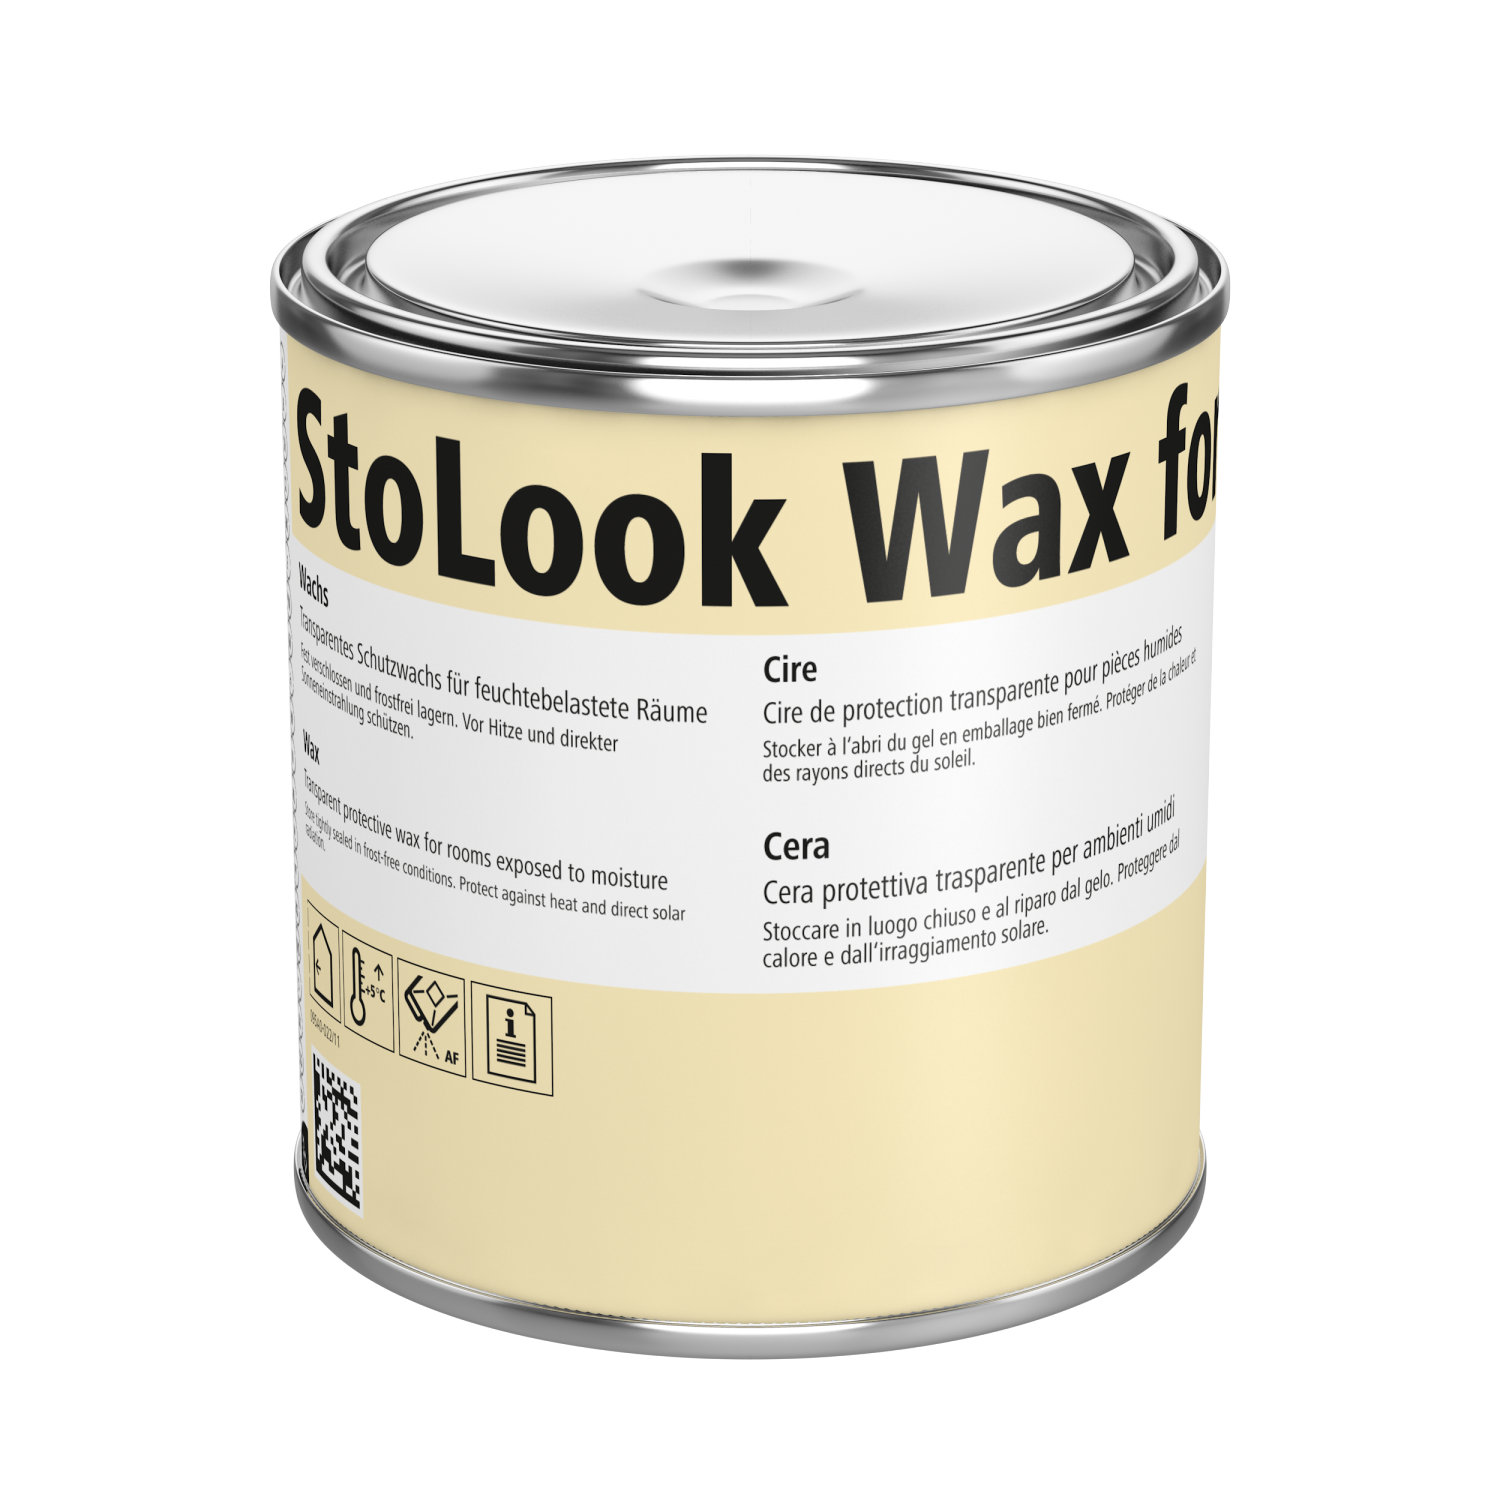 StoLookWaxforte-1.jpeg